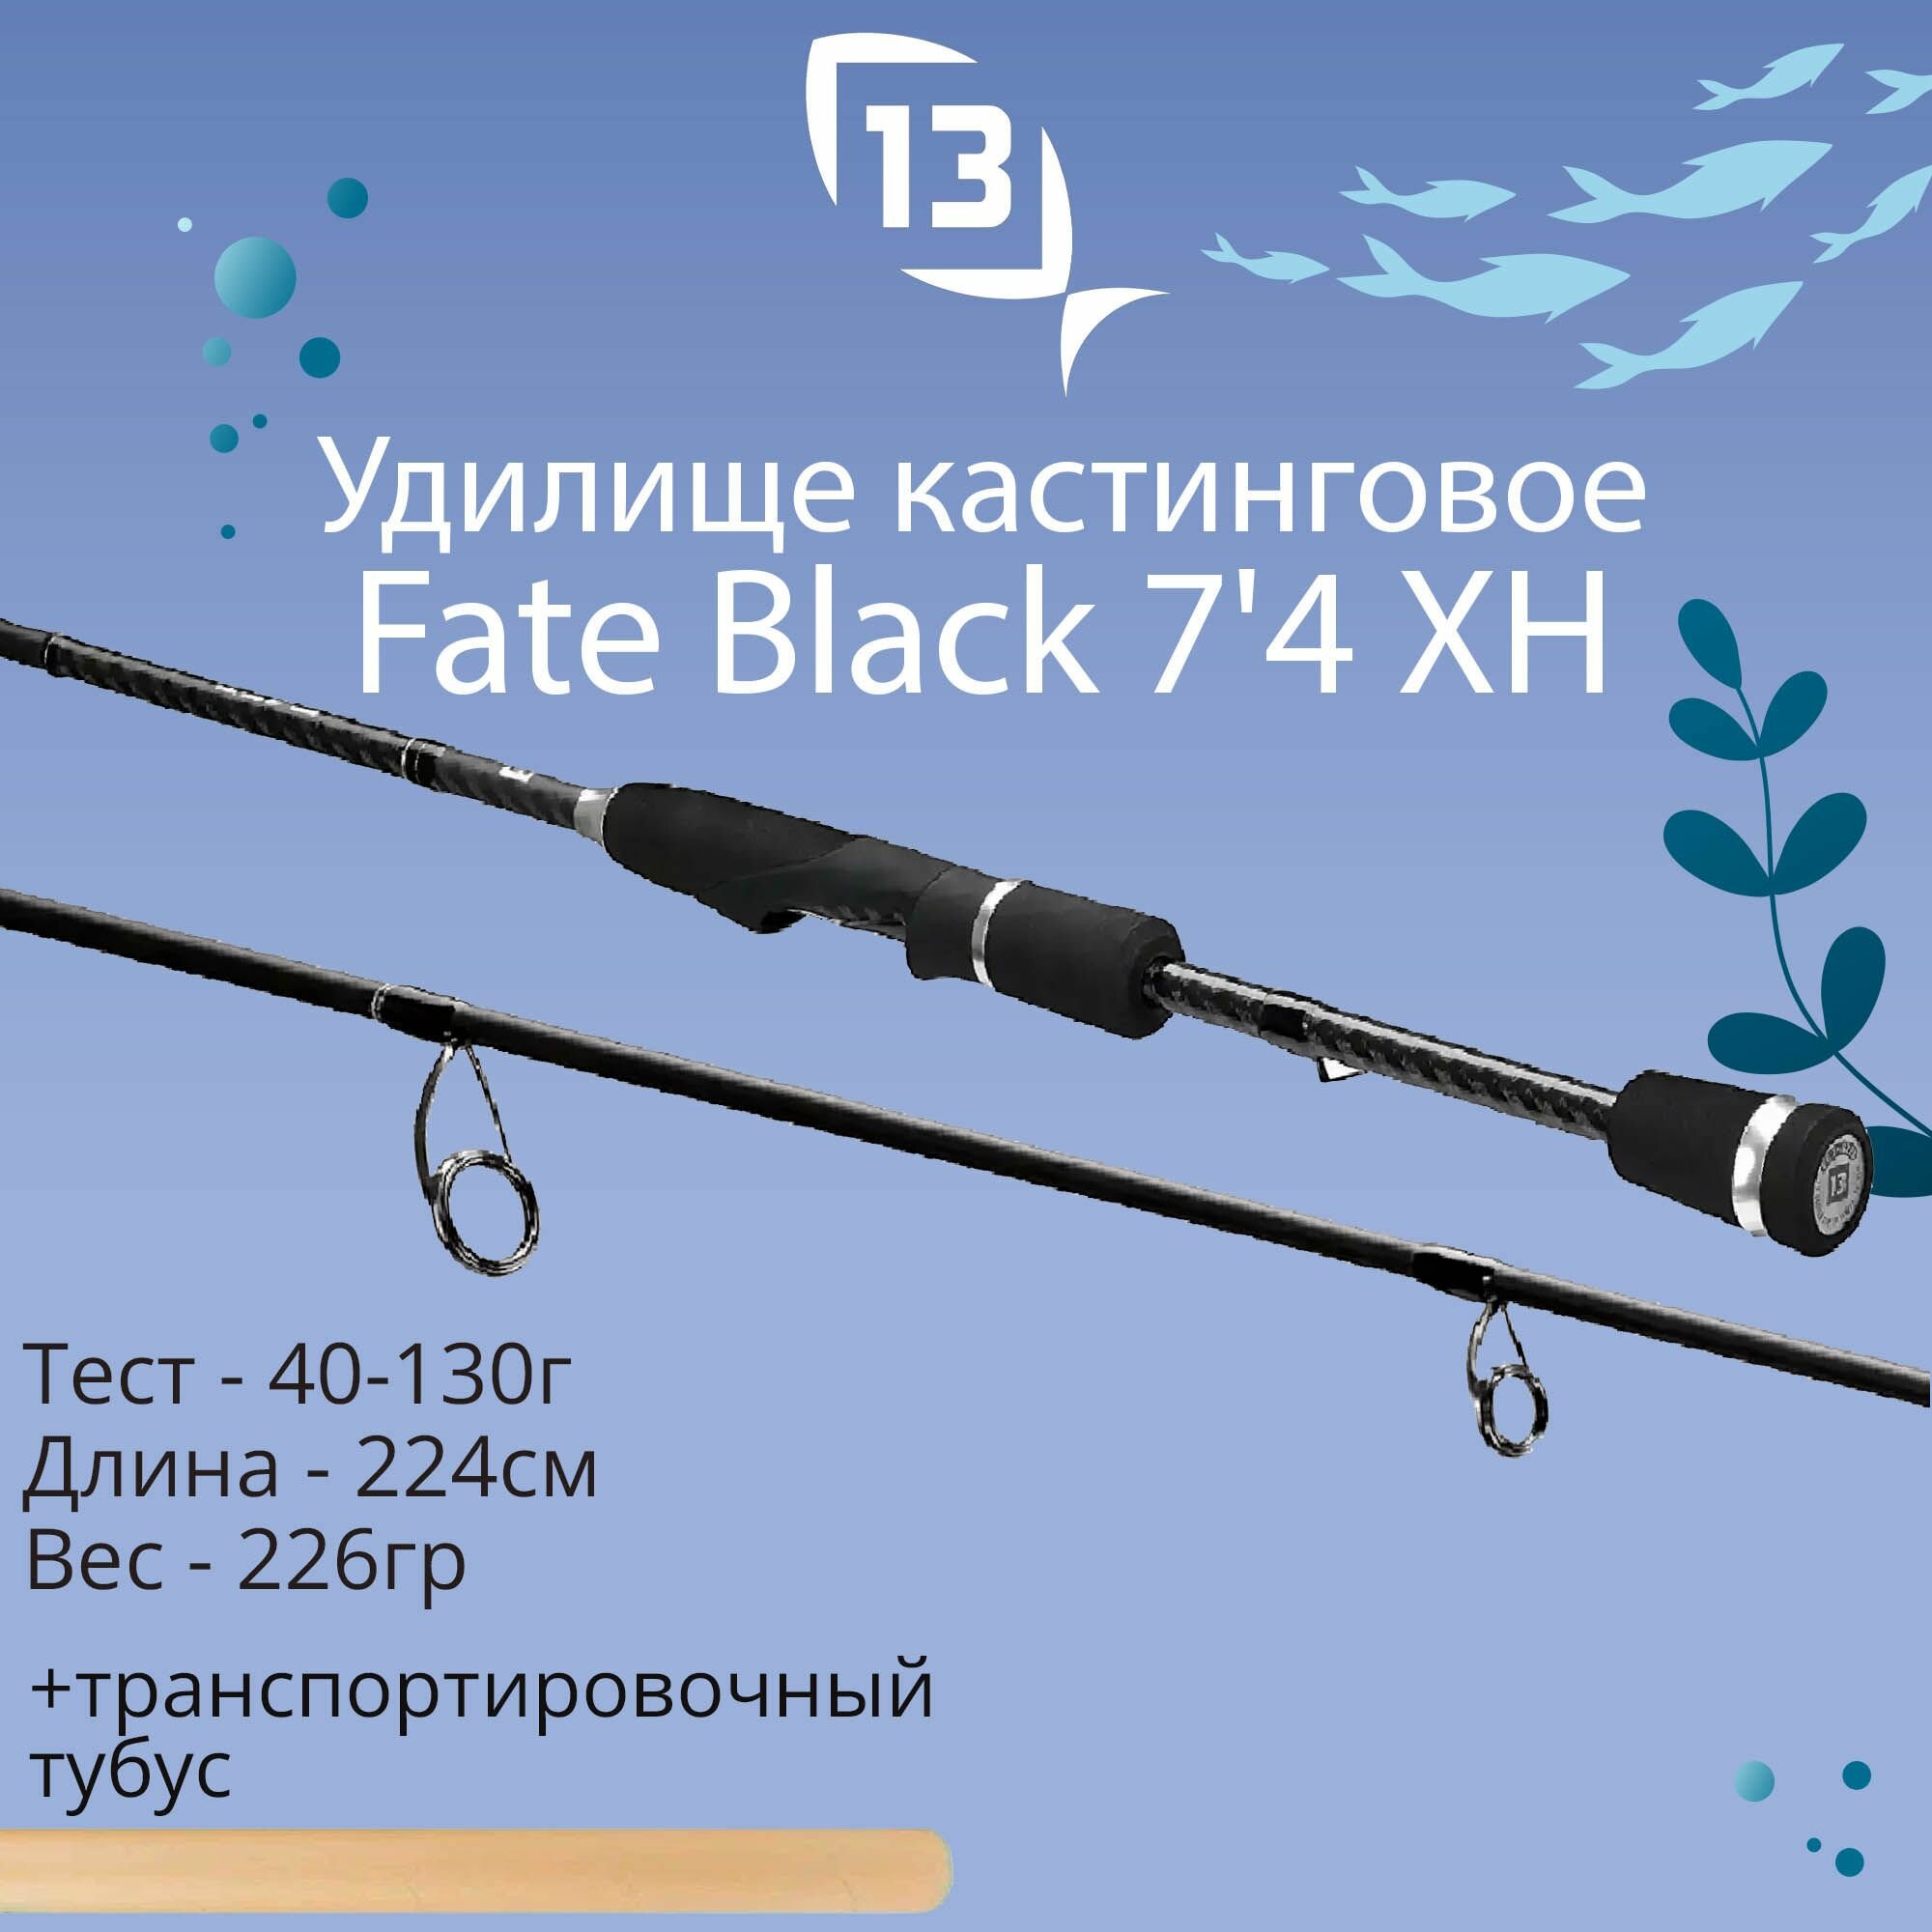 Удилище для рыбалки кастинговое 13 Fishing Fate Black - 7'4 XH 40-130g Cast rod - 2pc